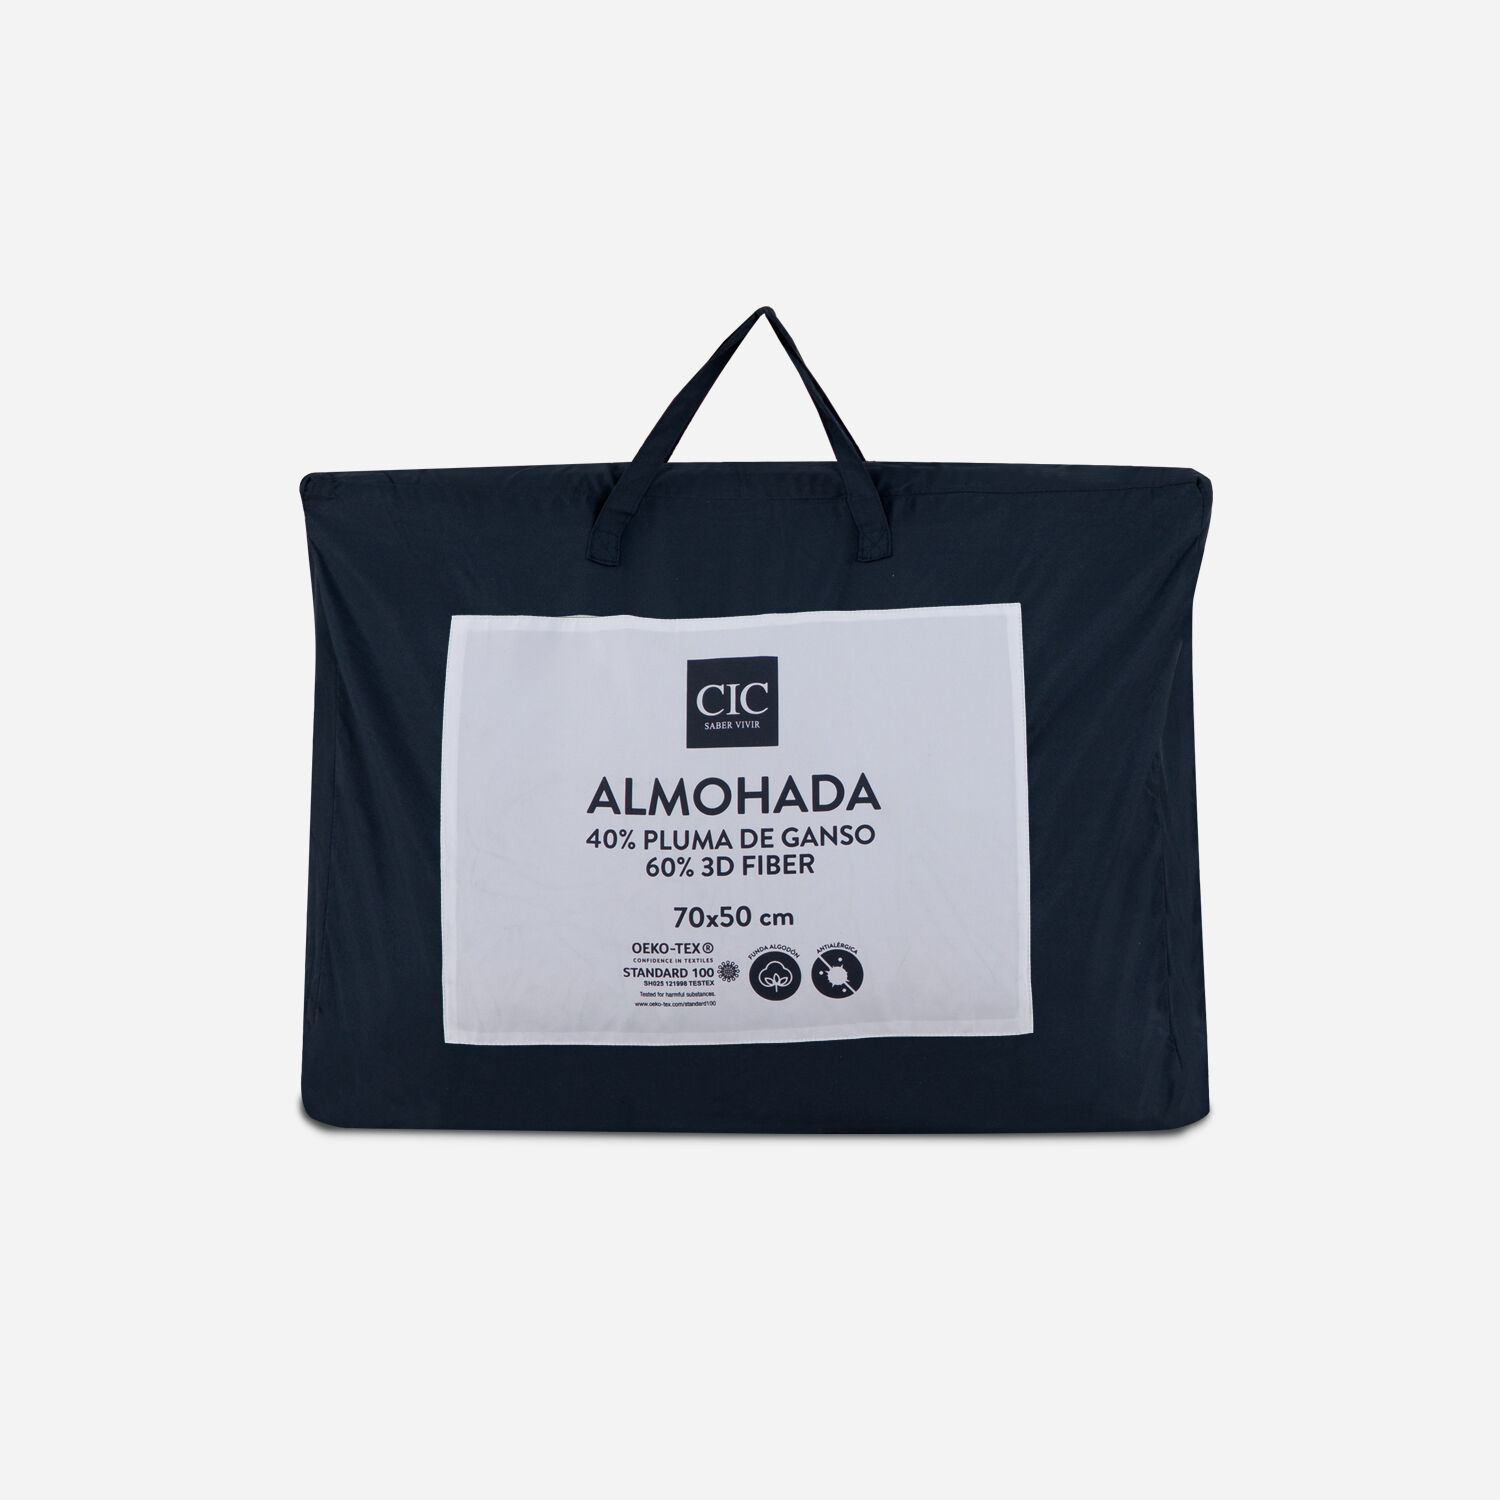 Almohada 40% Pluma Ganso + Microfibra 50X70 Cm.